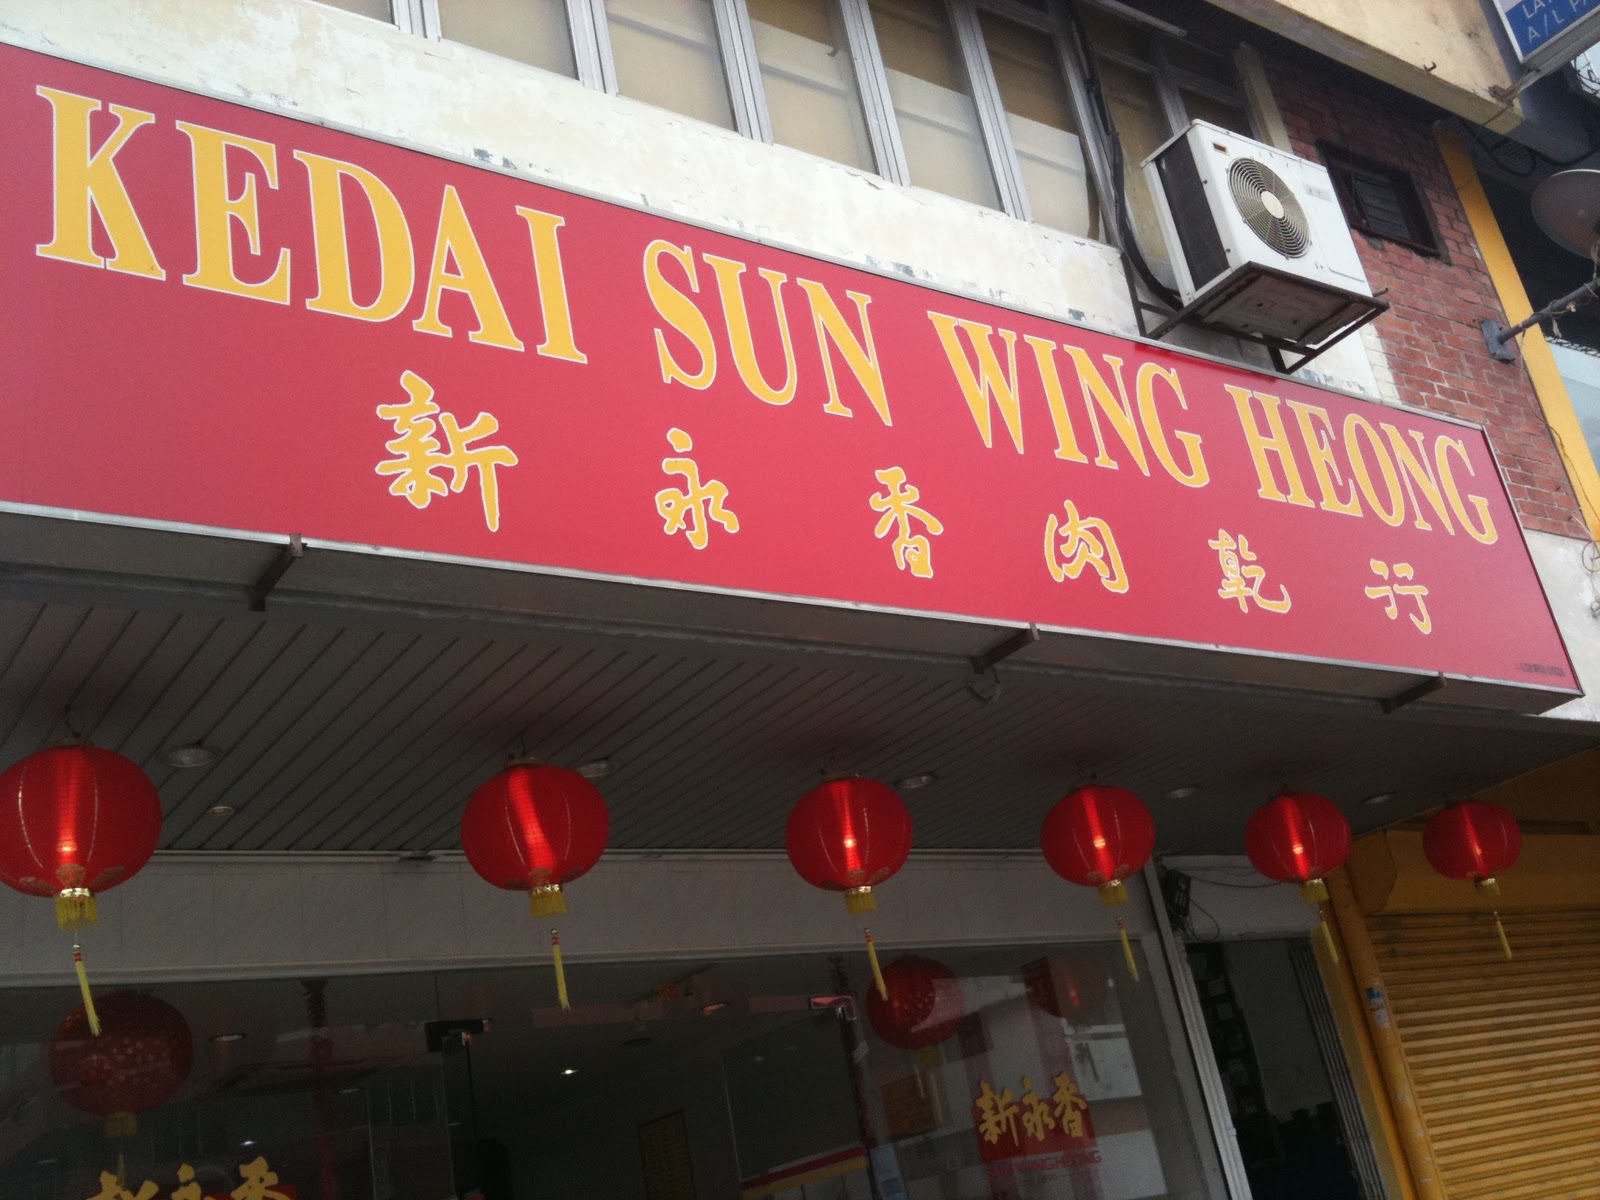 Sun wing heong